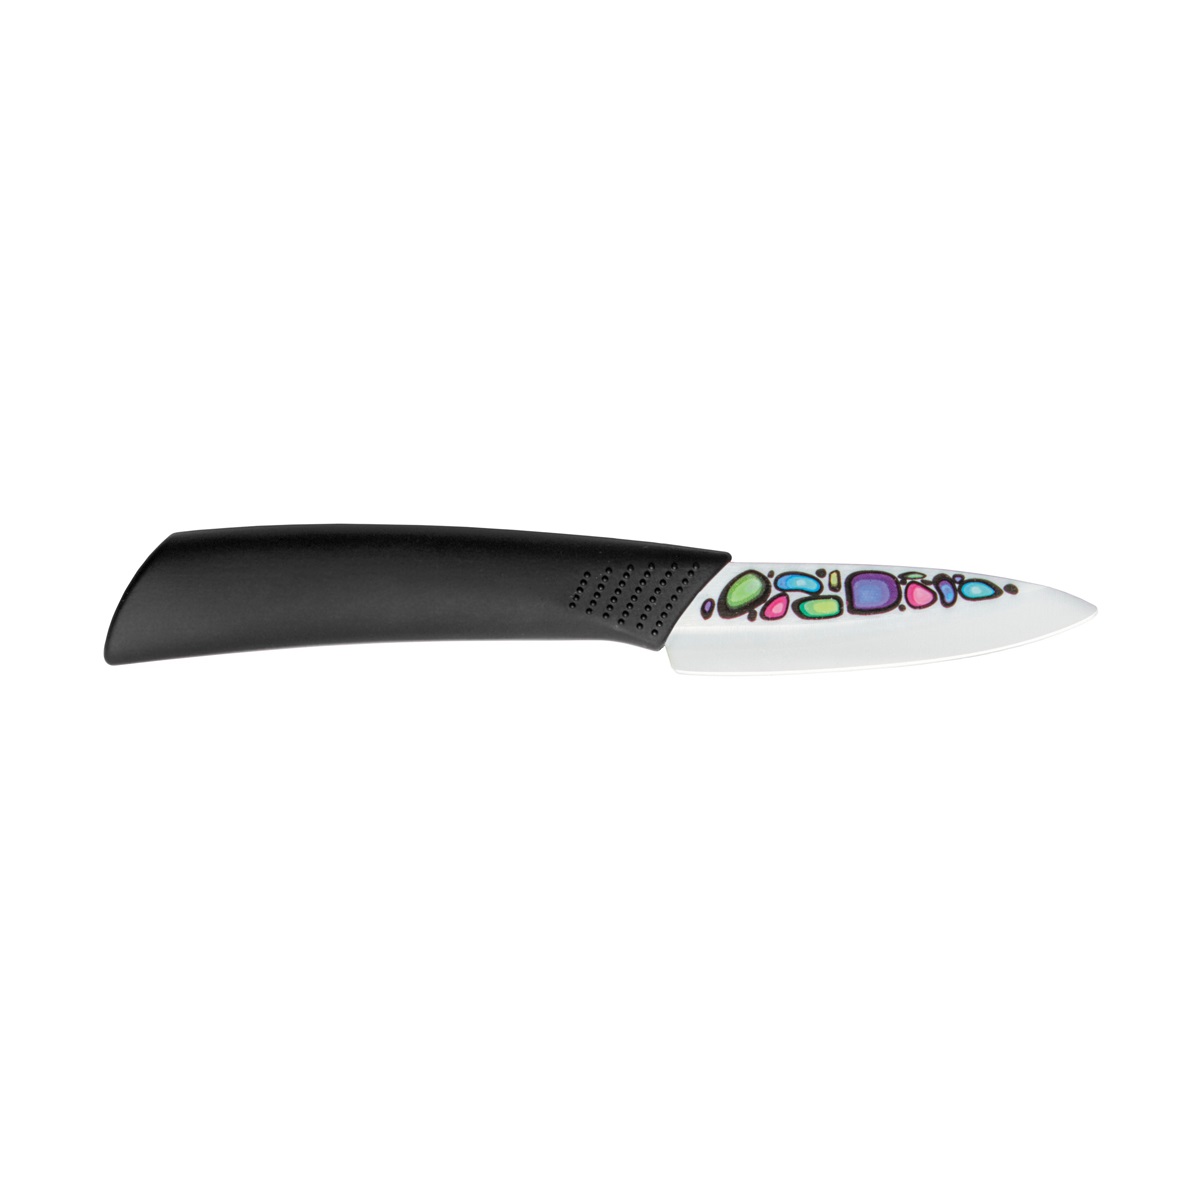 Кухонный нож Omoikiri Micadzo Imari-W 4992016 кухонный гаджет ownland m 791 5 в 1